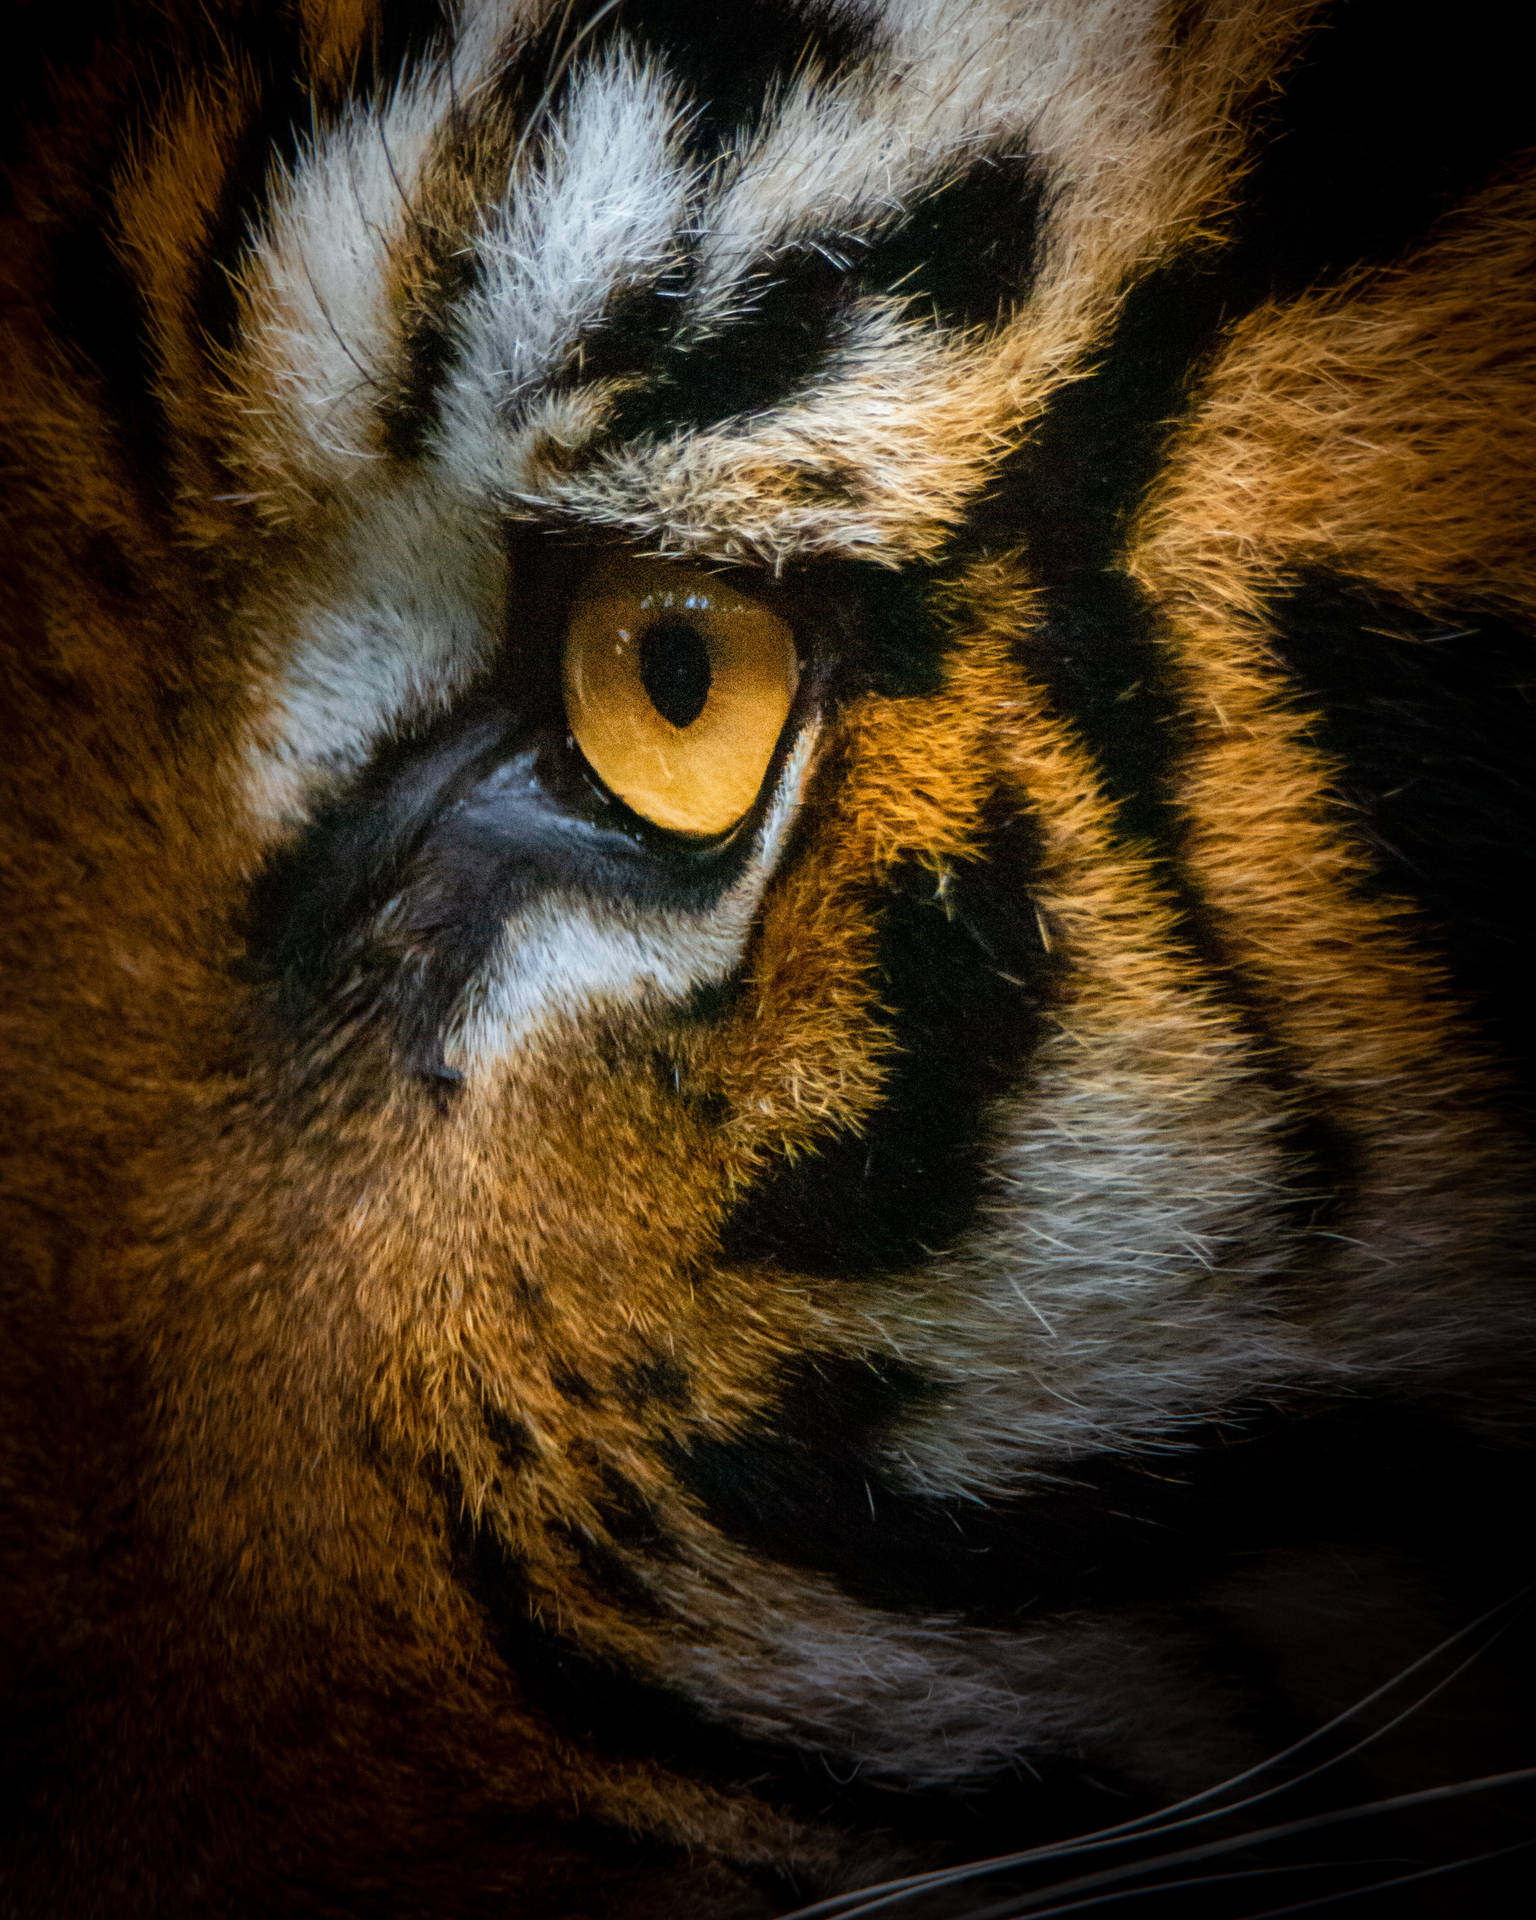 The piercing gaze of a wild tiger. Wallpaper